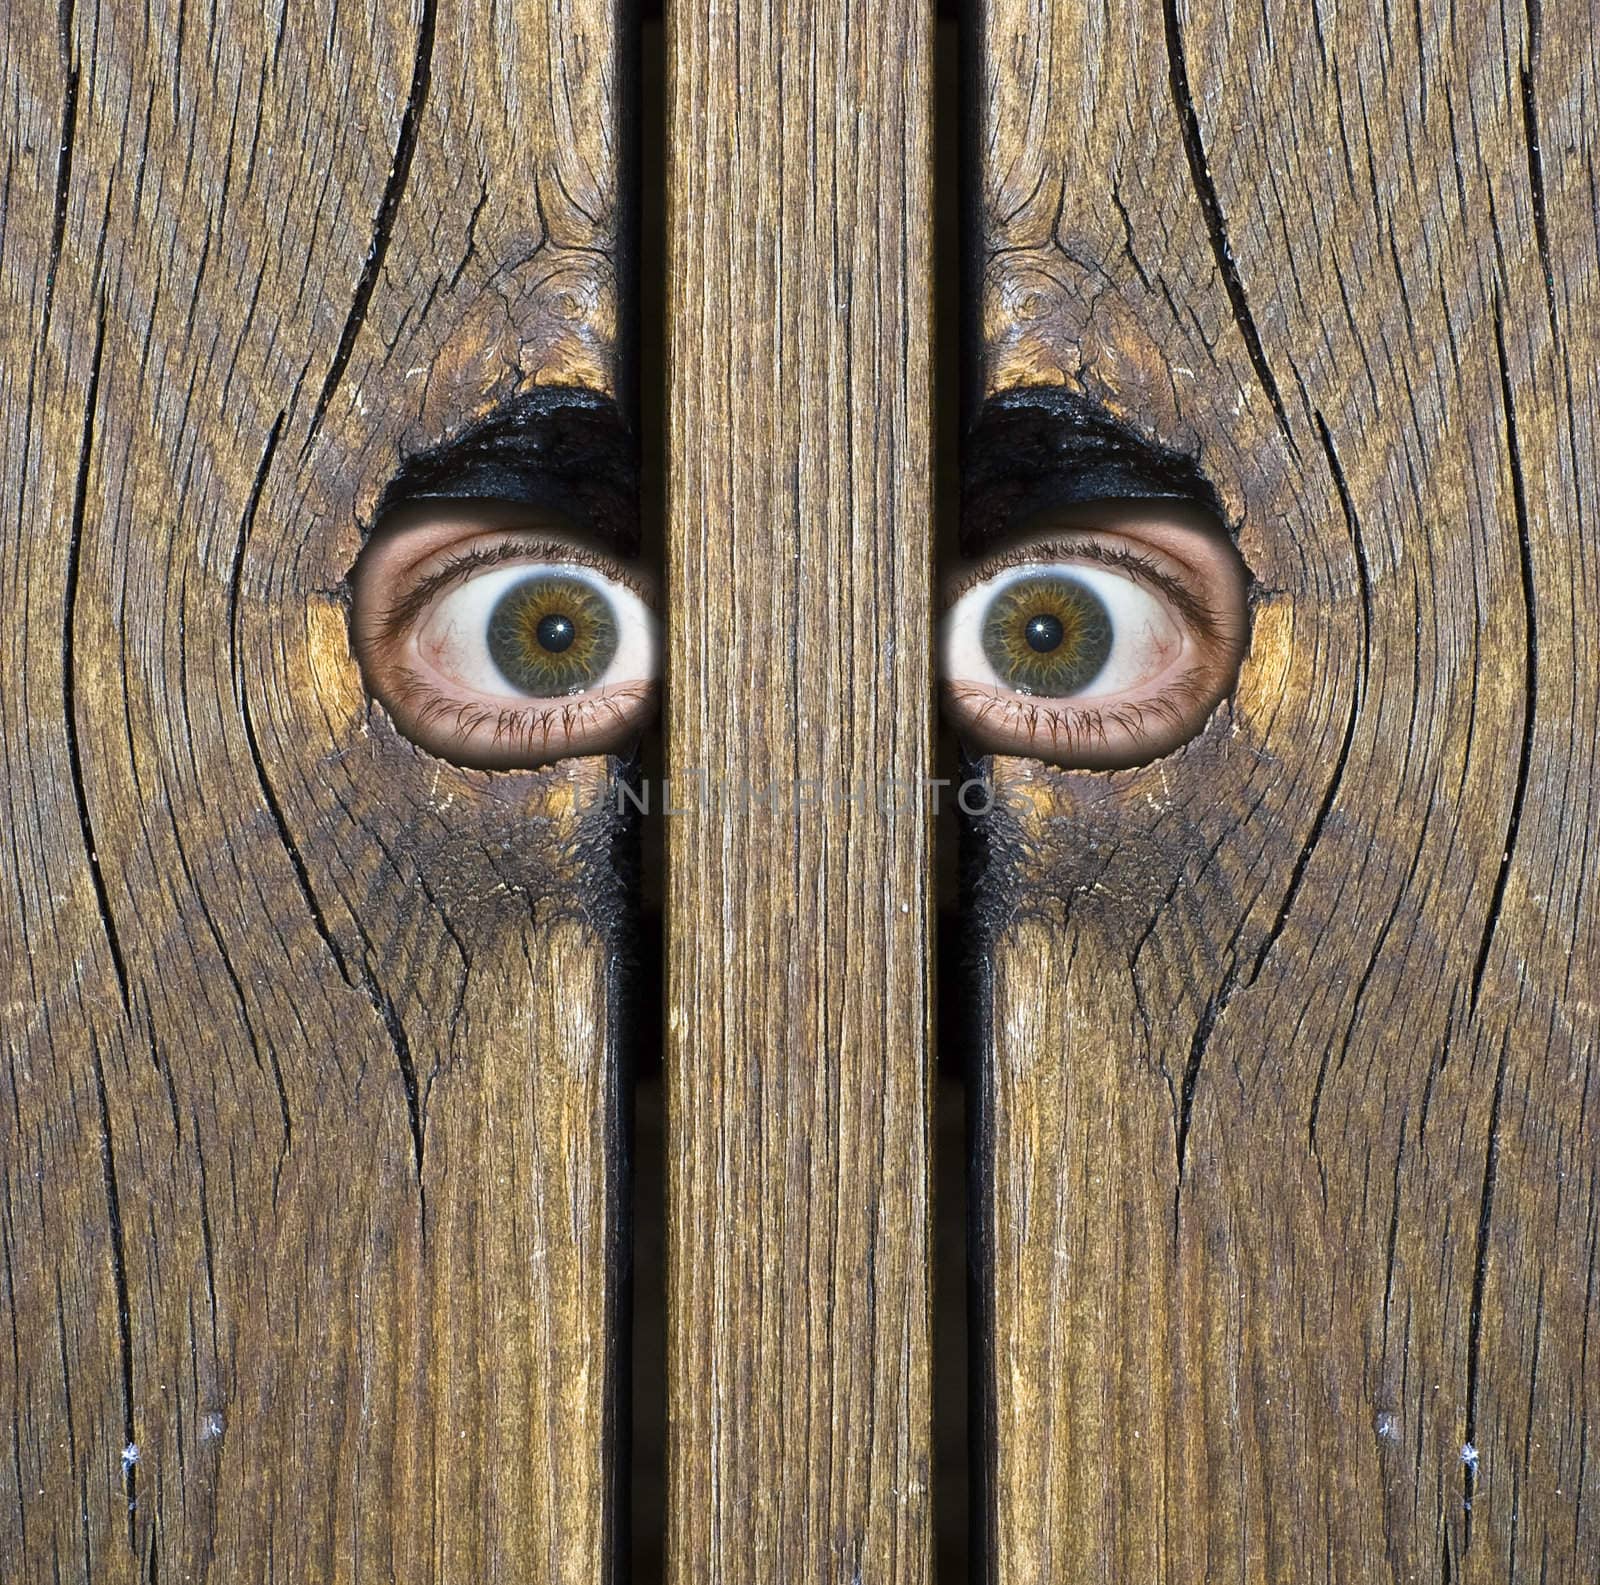 Two intense eyes peeking through hole in fence!